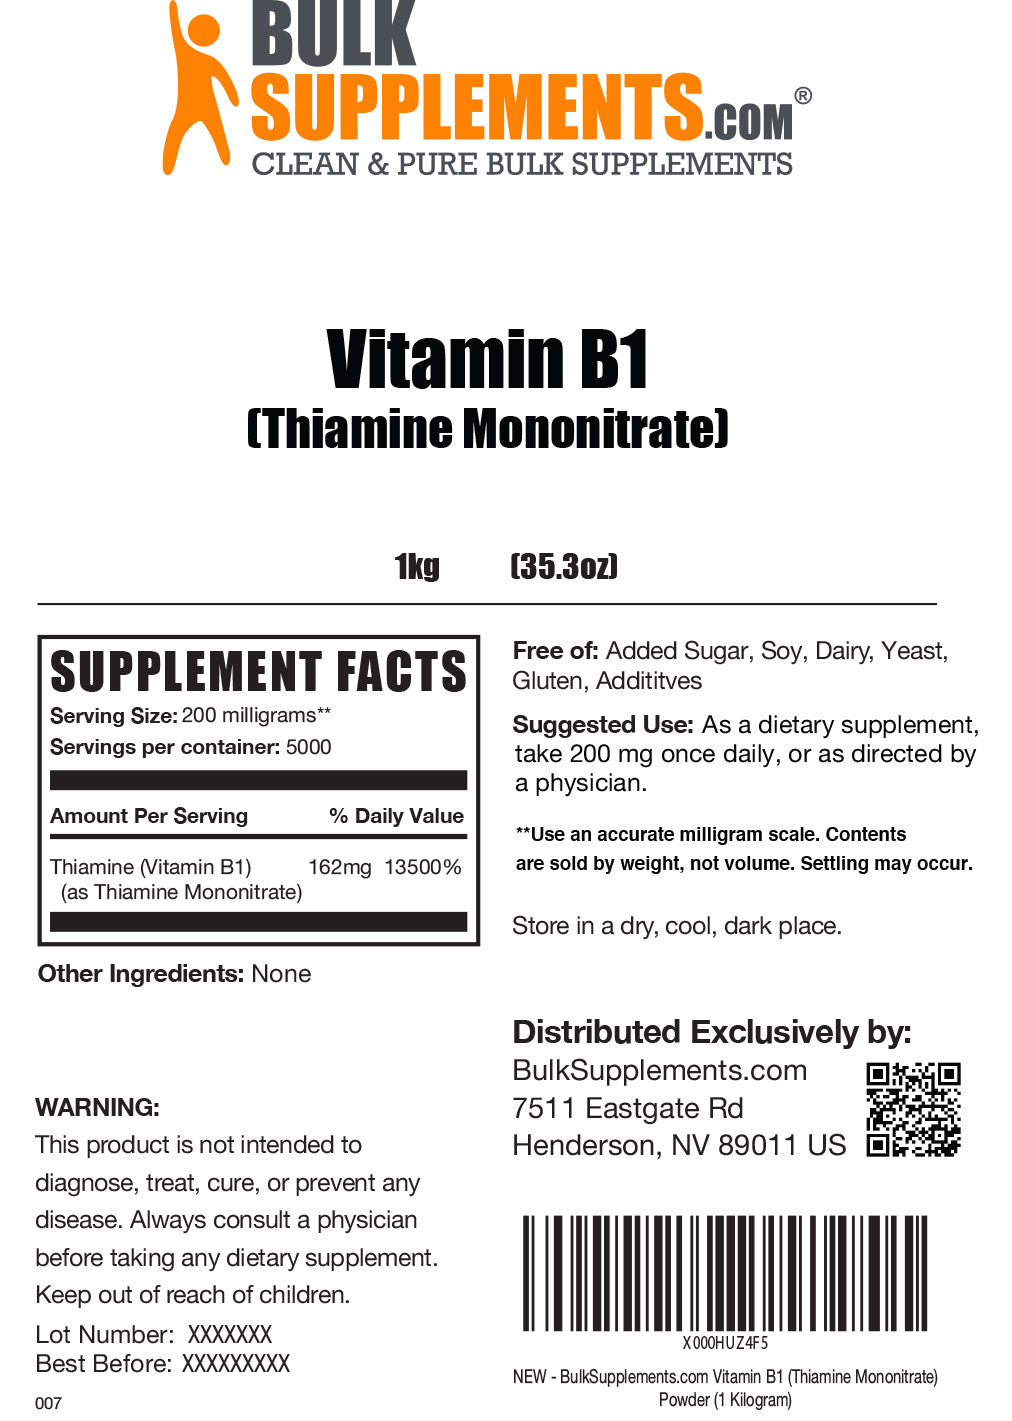 Vitamin B1 (Thiamine Mononitrate) Supplement Facts